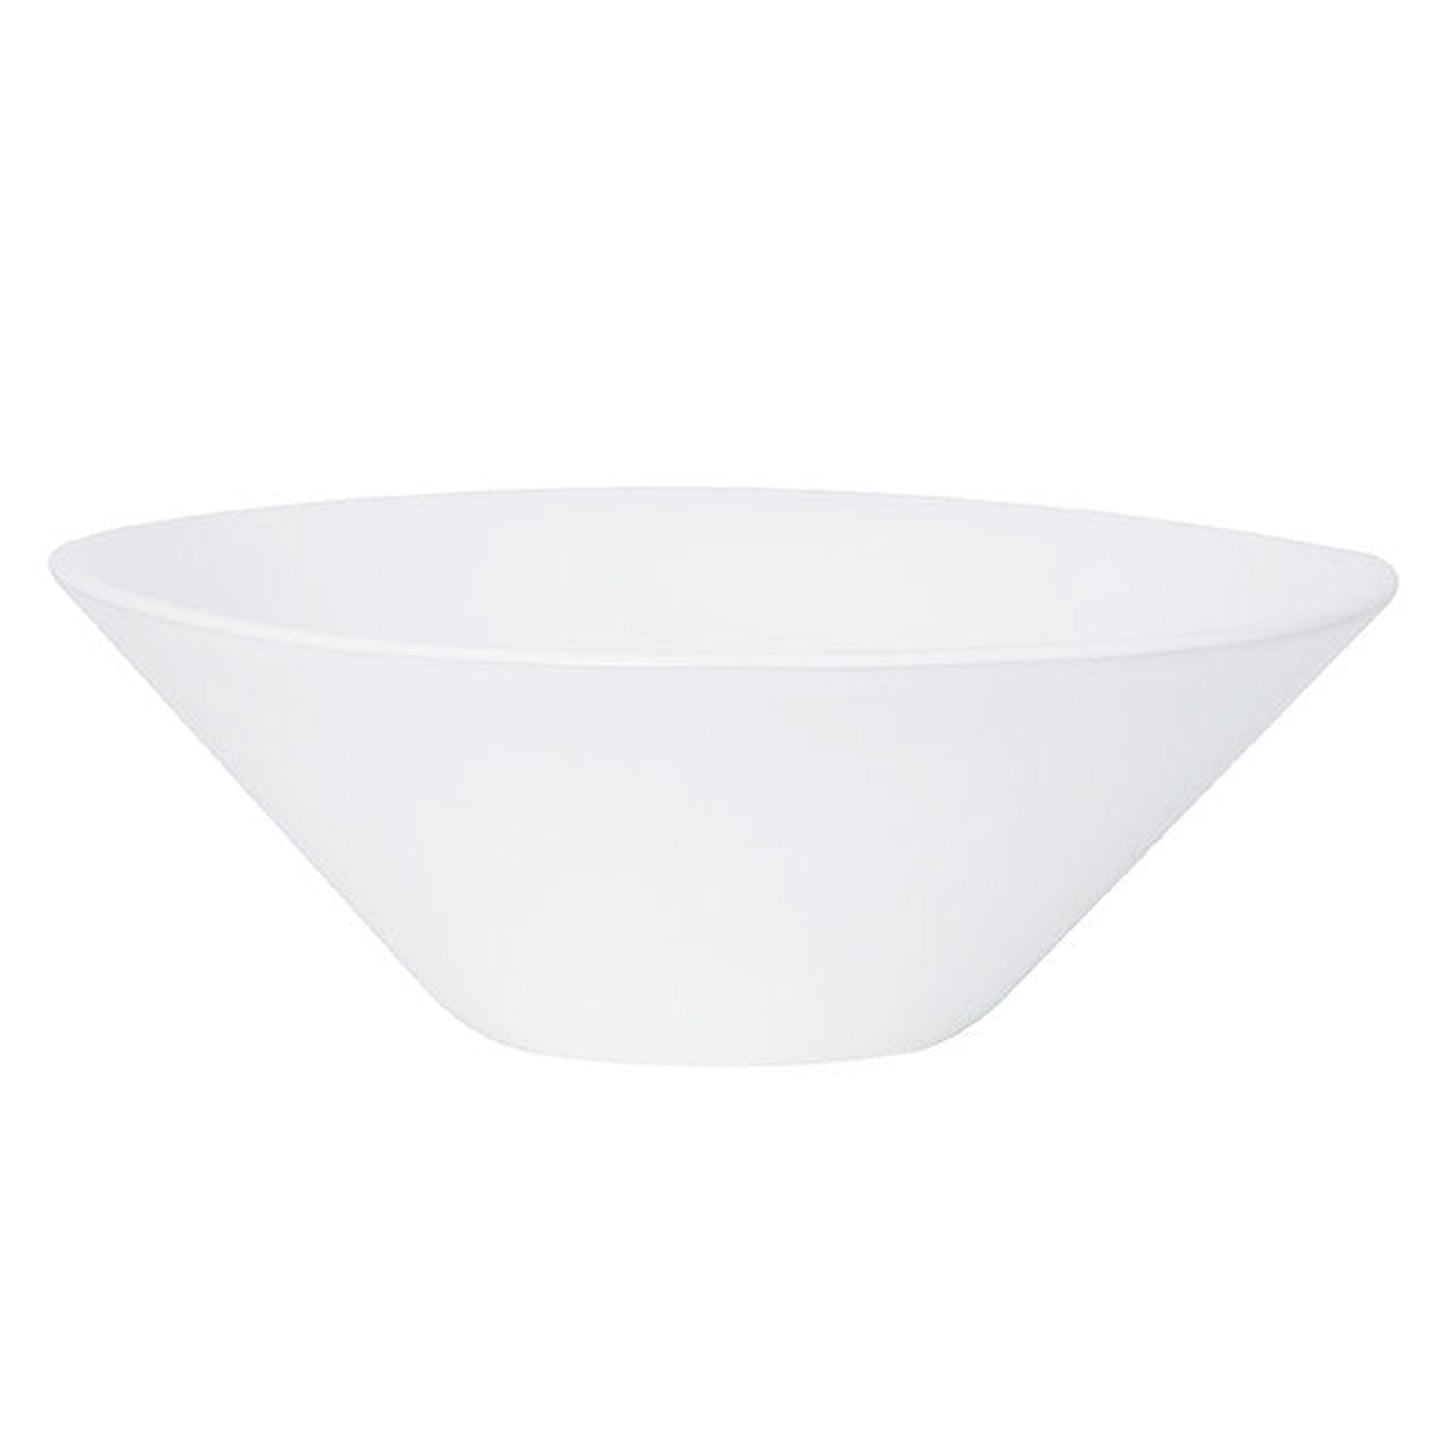 Nantucket Sinks Brant Point 17" Round Low-Profile Porcelain Enamel Glazed White Ceramic Vessel Sink